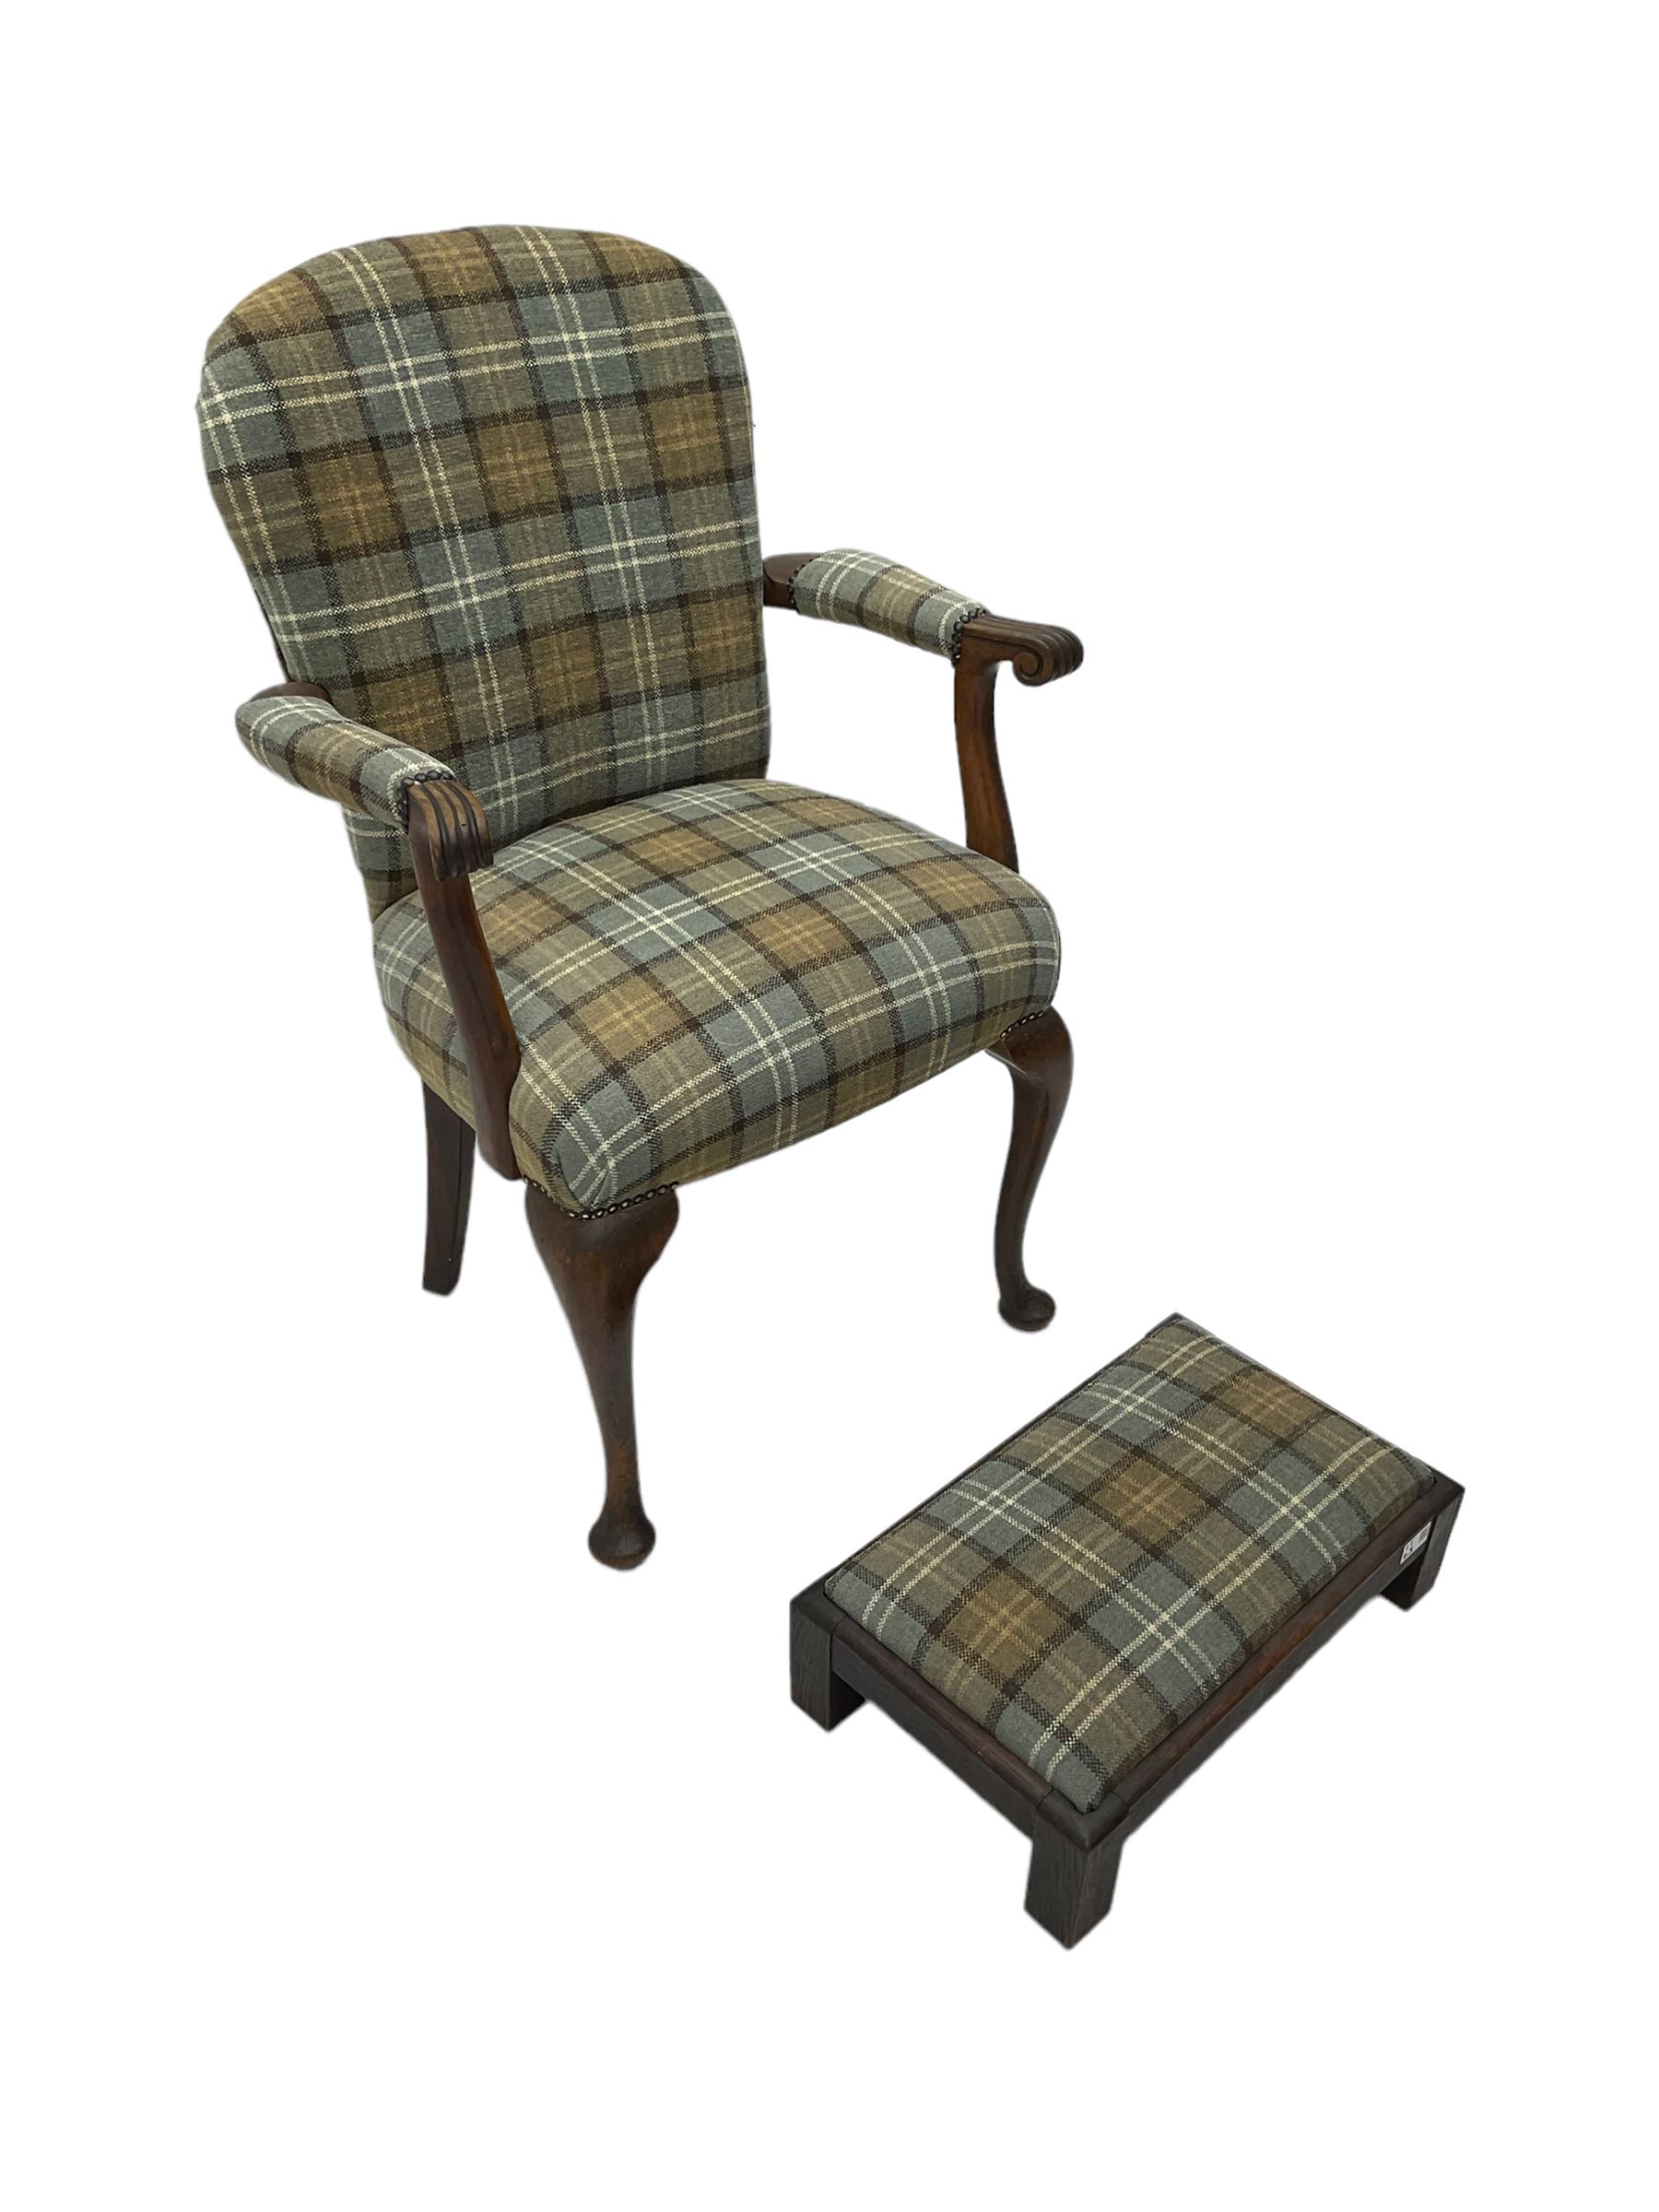 Late 19th century walnut open armchair in tartan fabric - Image 6 of 6